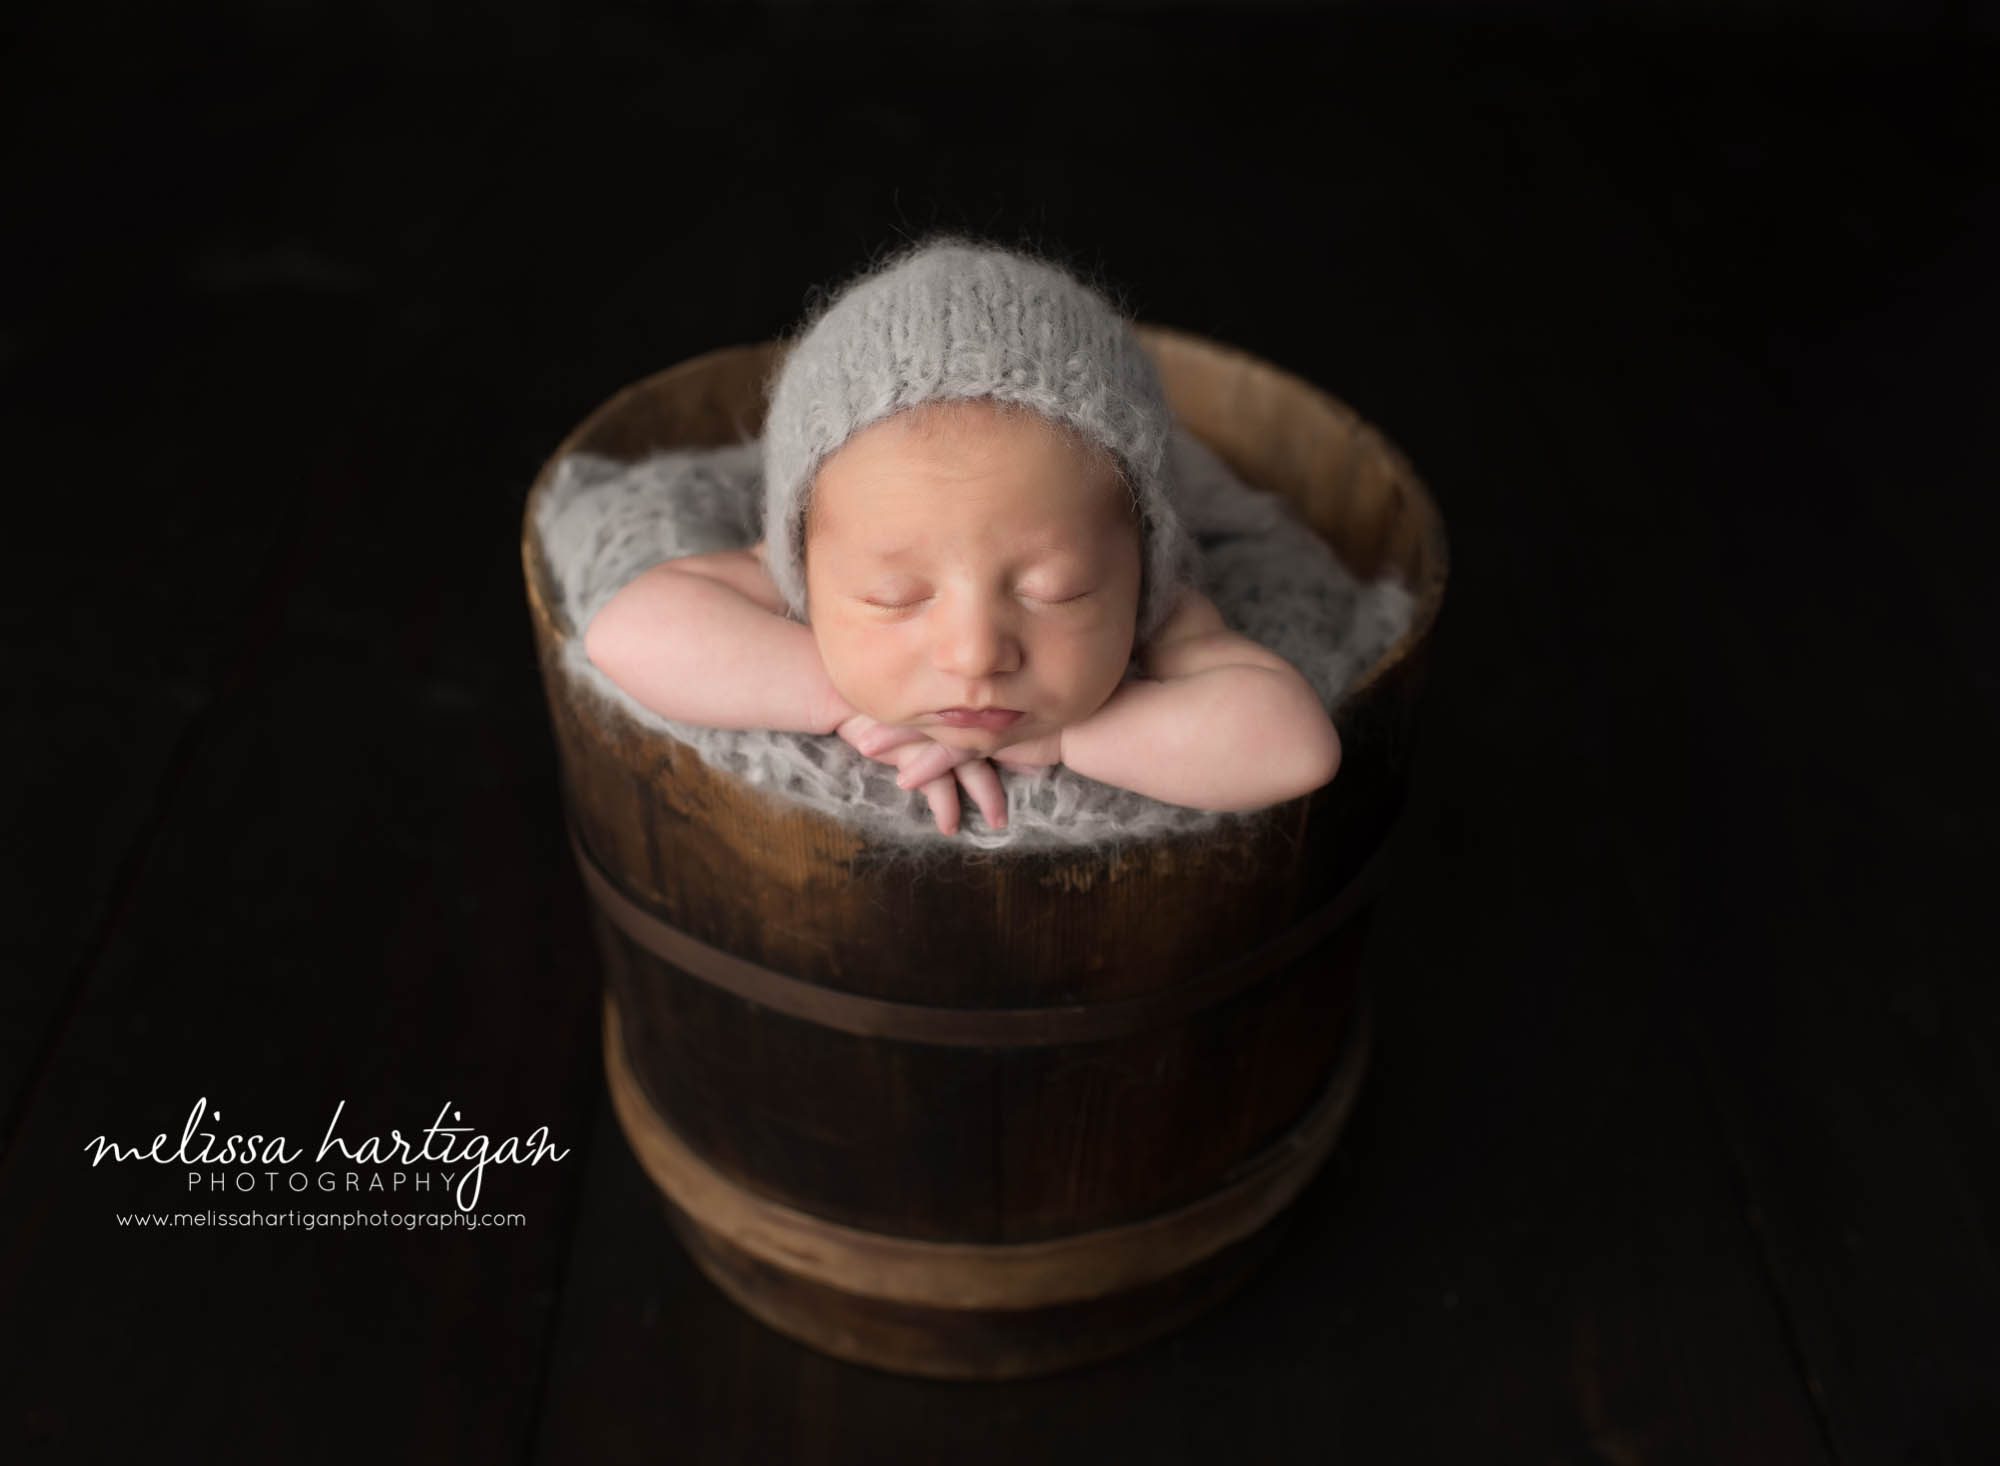 Newborn Photographer Connecticut newborn pose baby sleeping in wooden bucket with gray knit hat